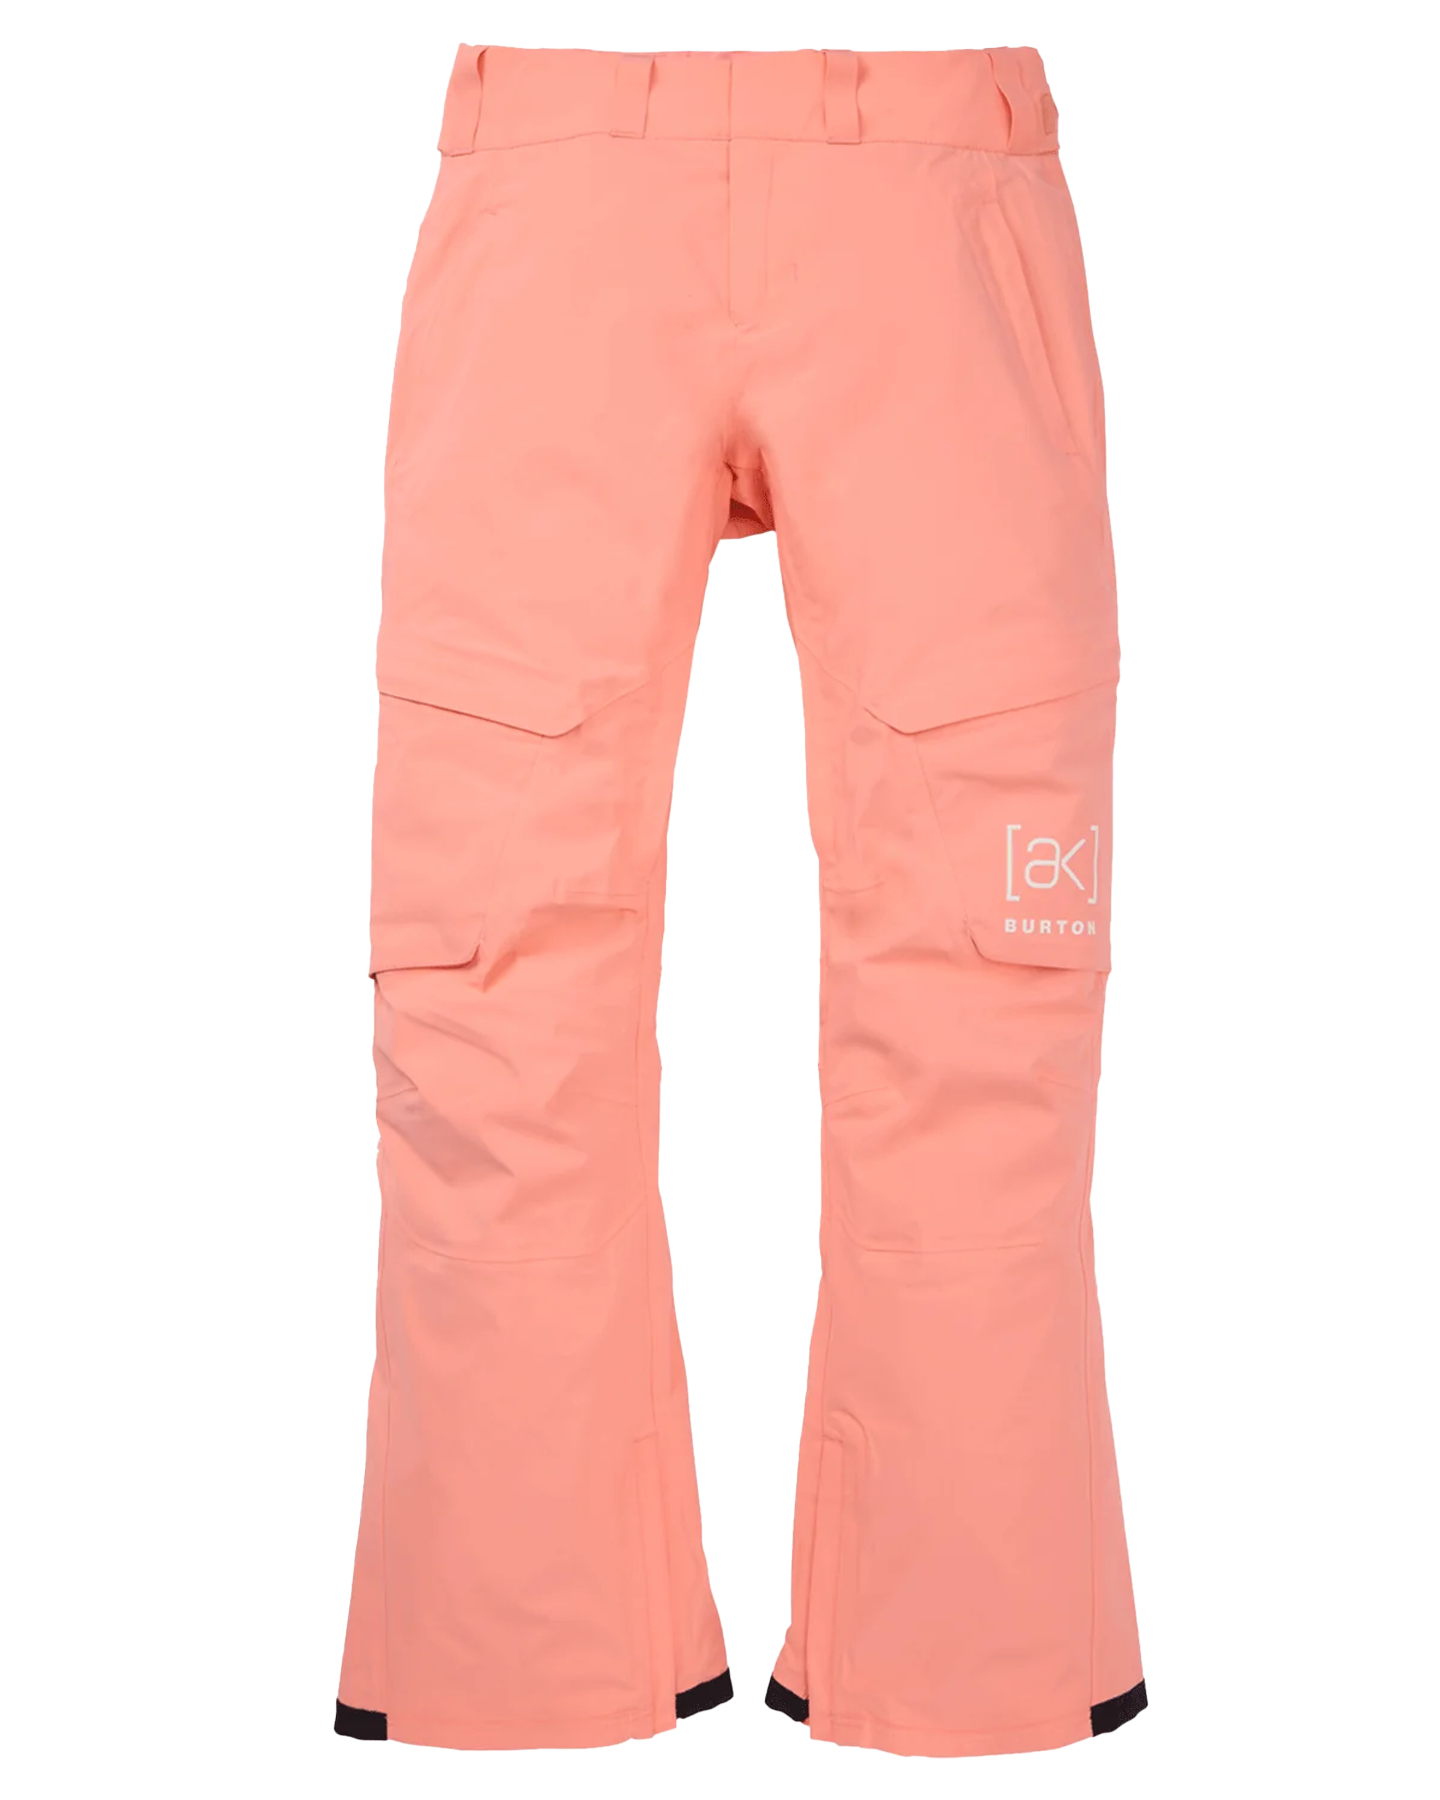 Burton Women's [ak]® Summit Gore-Tex 2L Snow Pants - Reef Pink Women's Snow Pants - SnowSkiersWarehouse